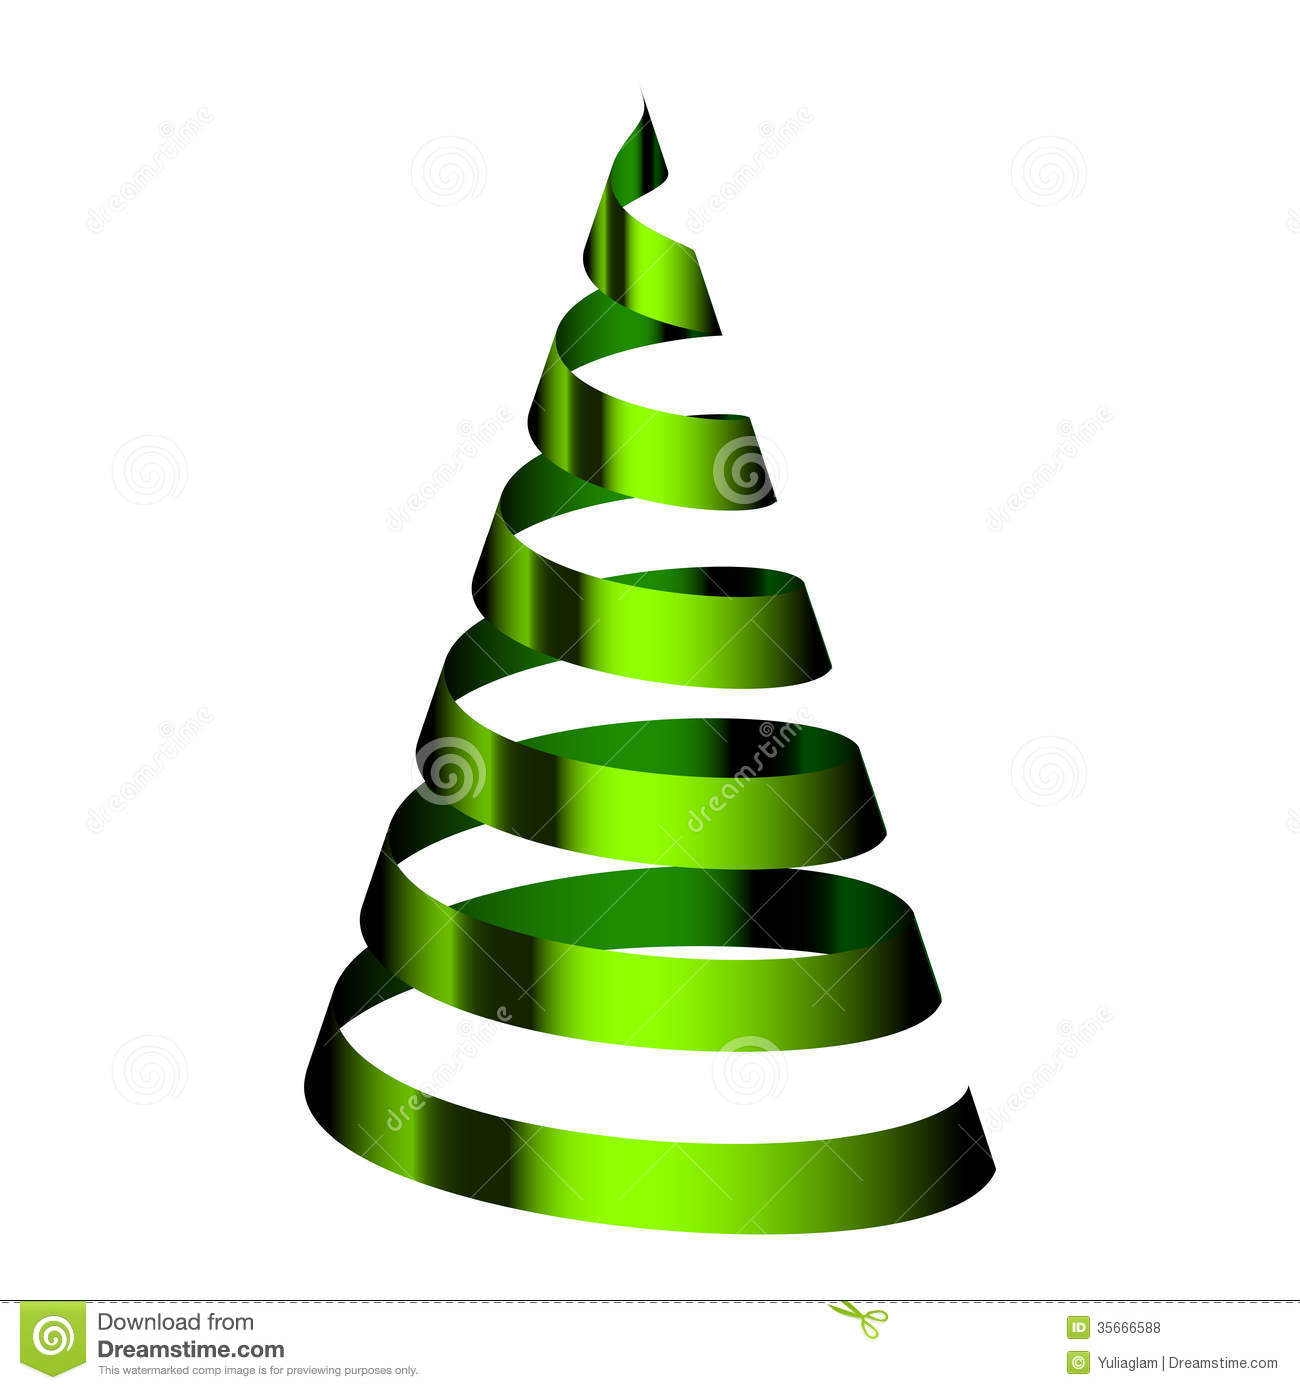 Green Christmas Tree with Ribbon